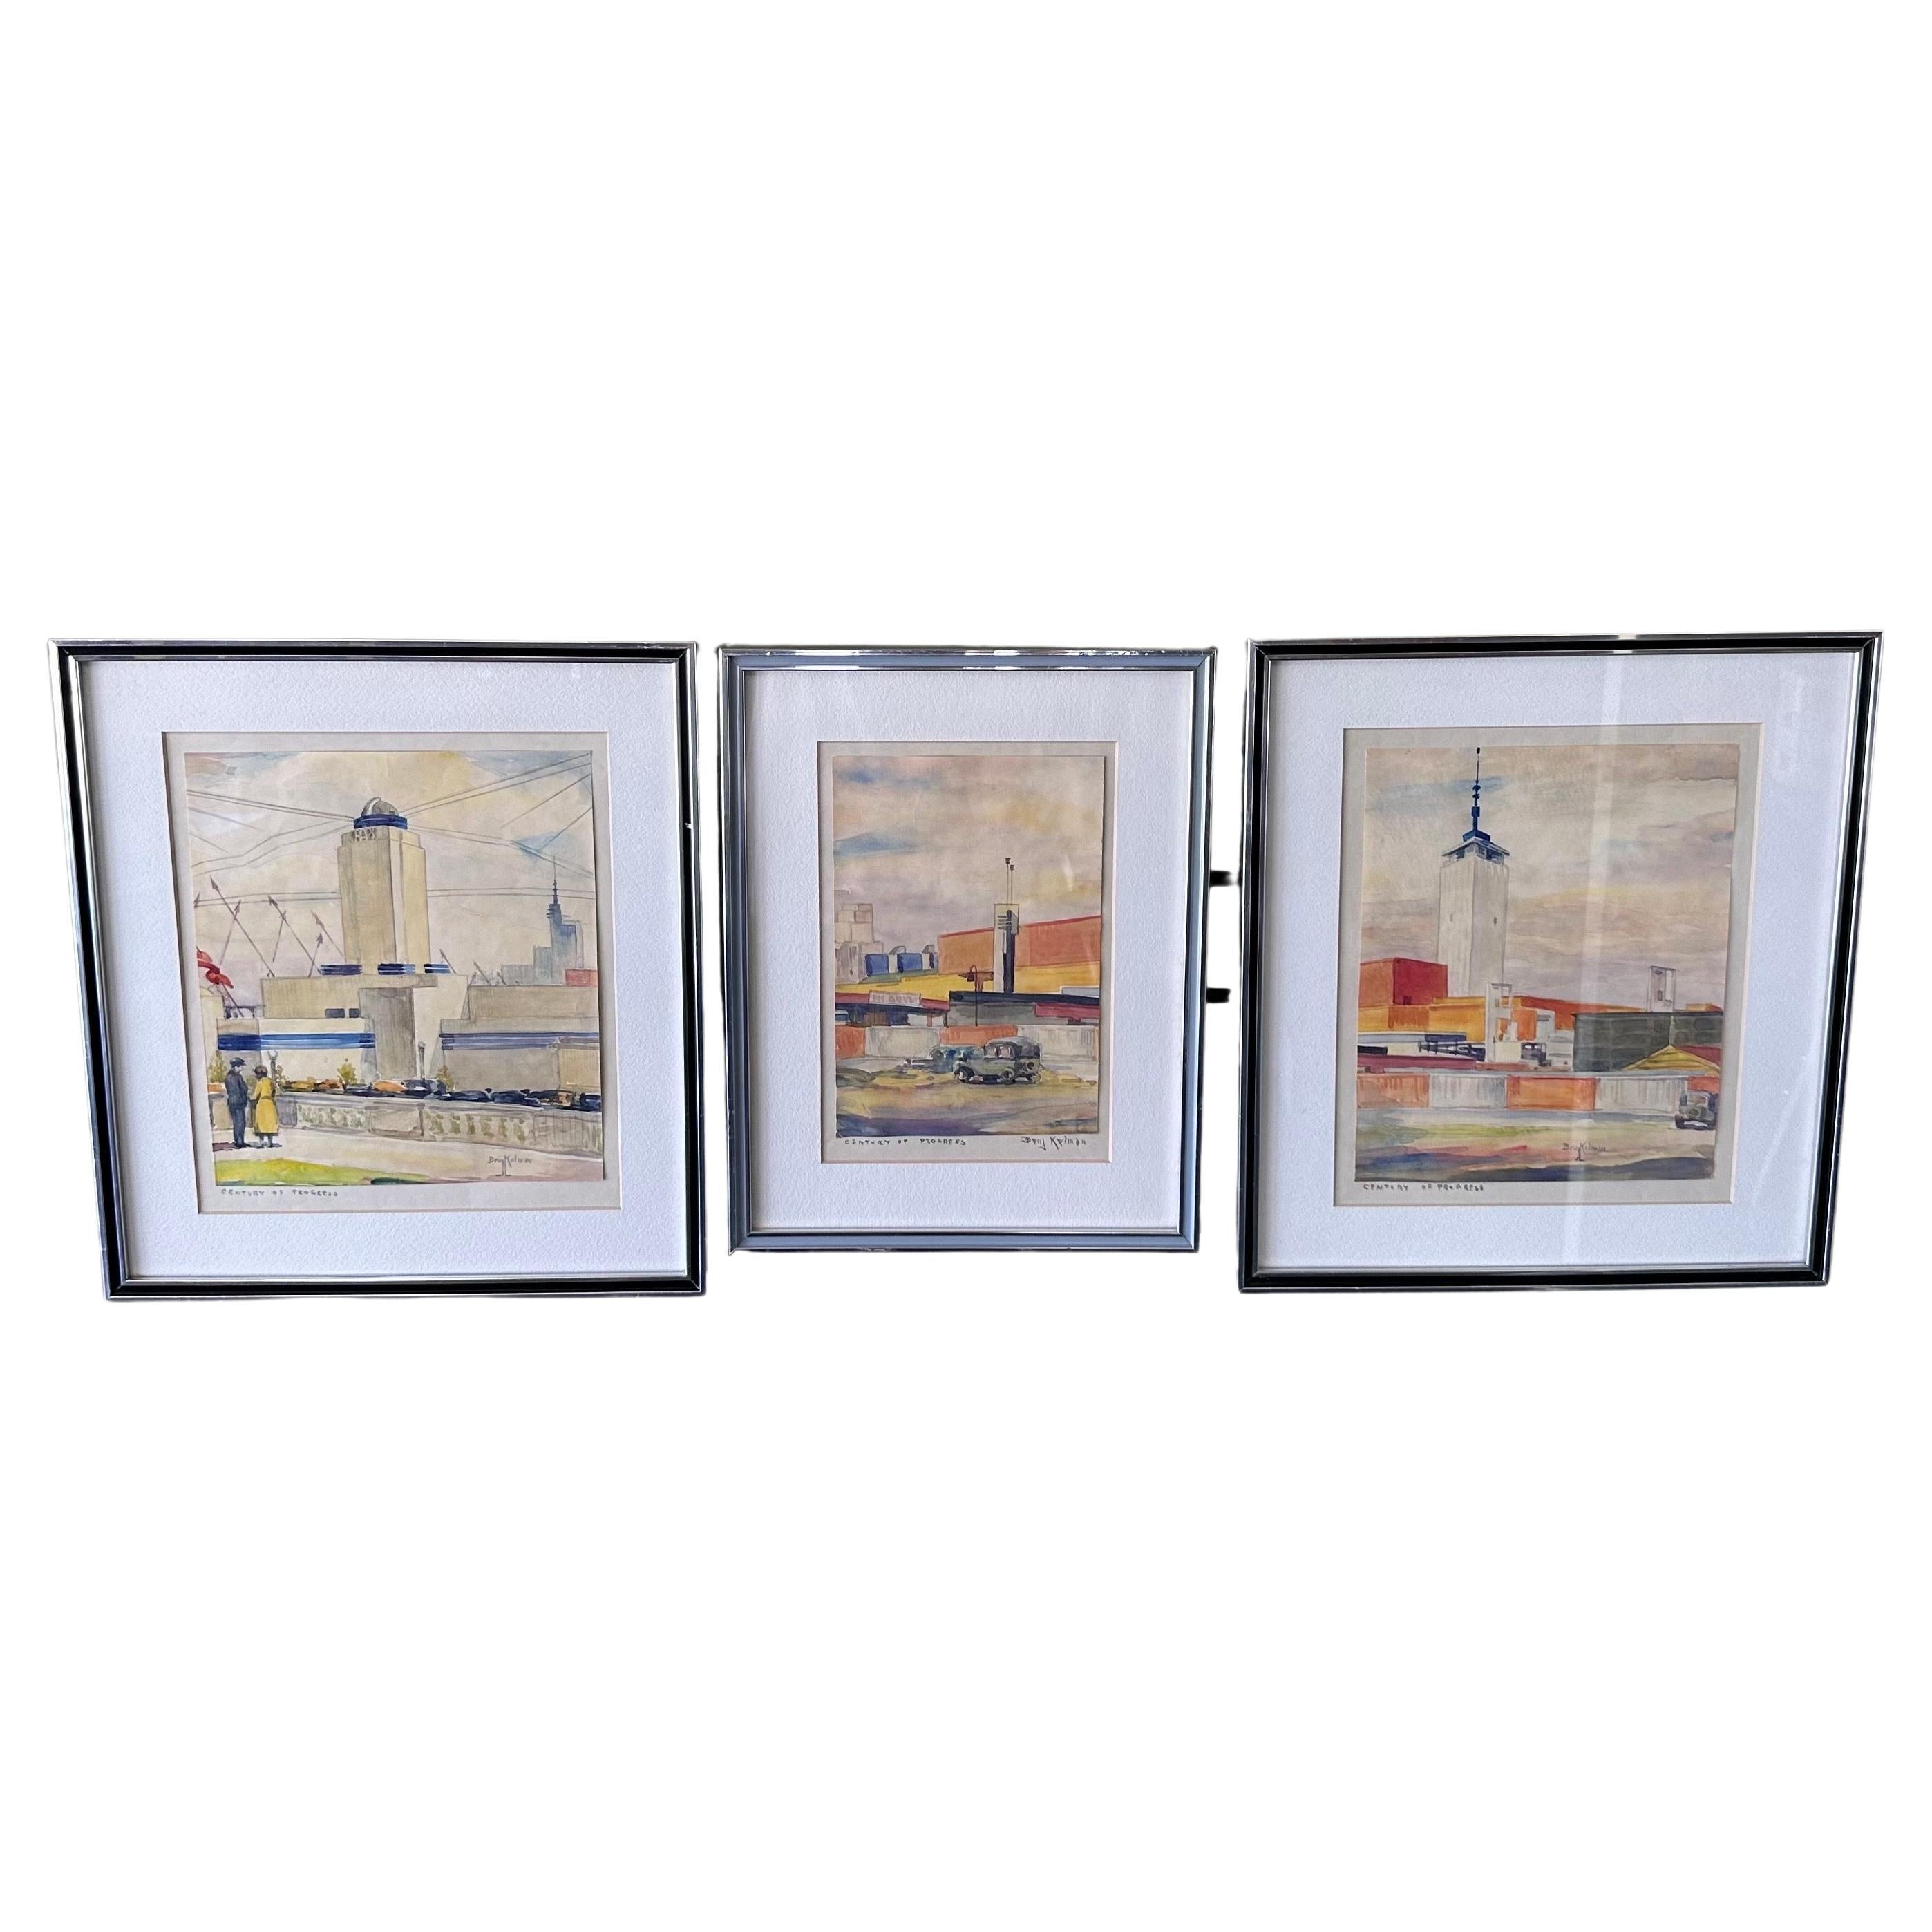 Trois aquarelles originales « Century of Progress » de Benjamin Kelman